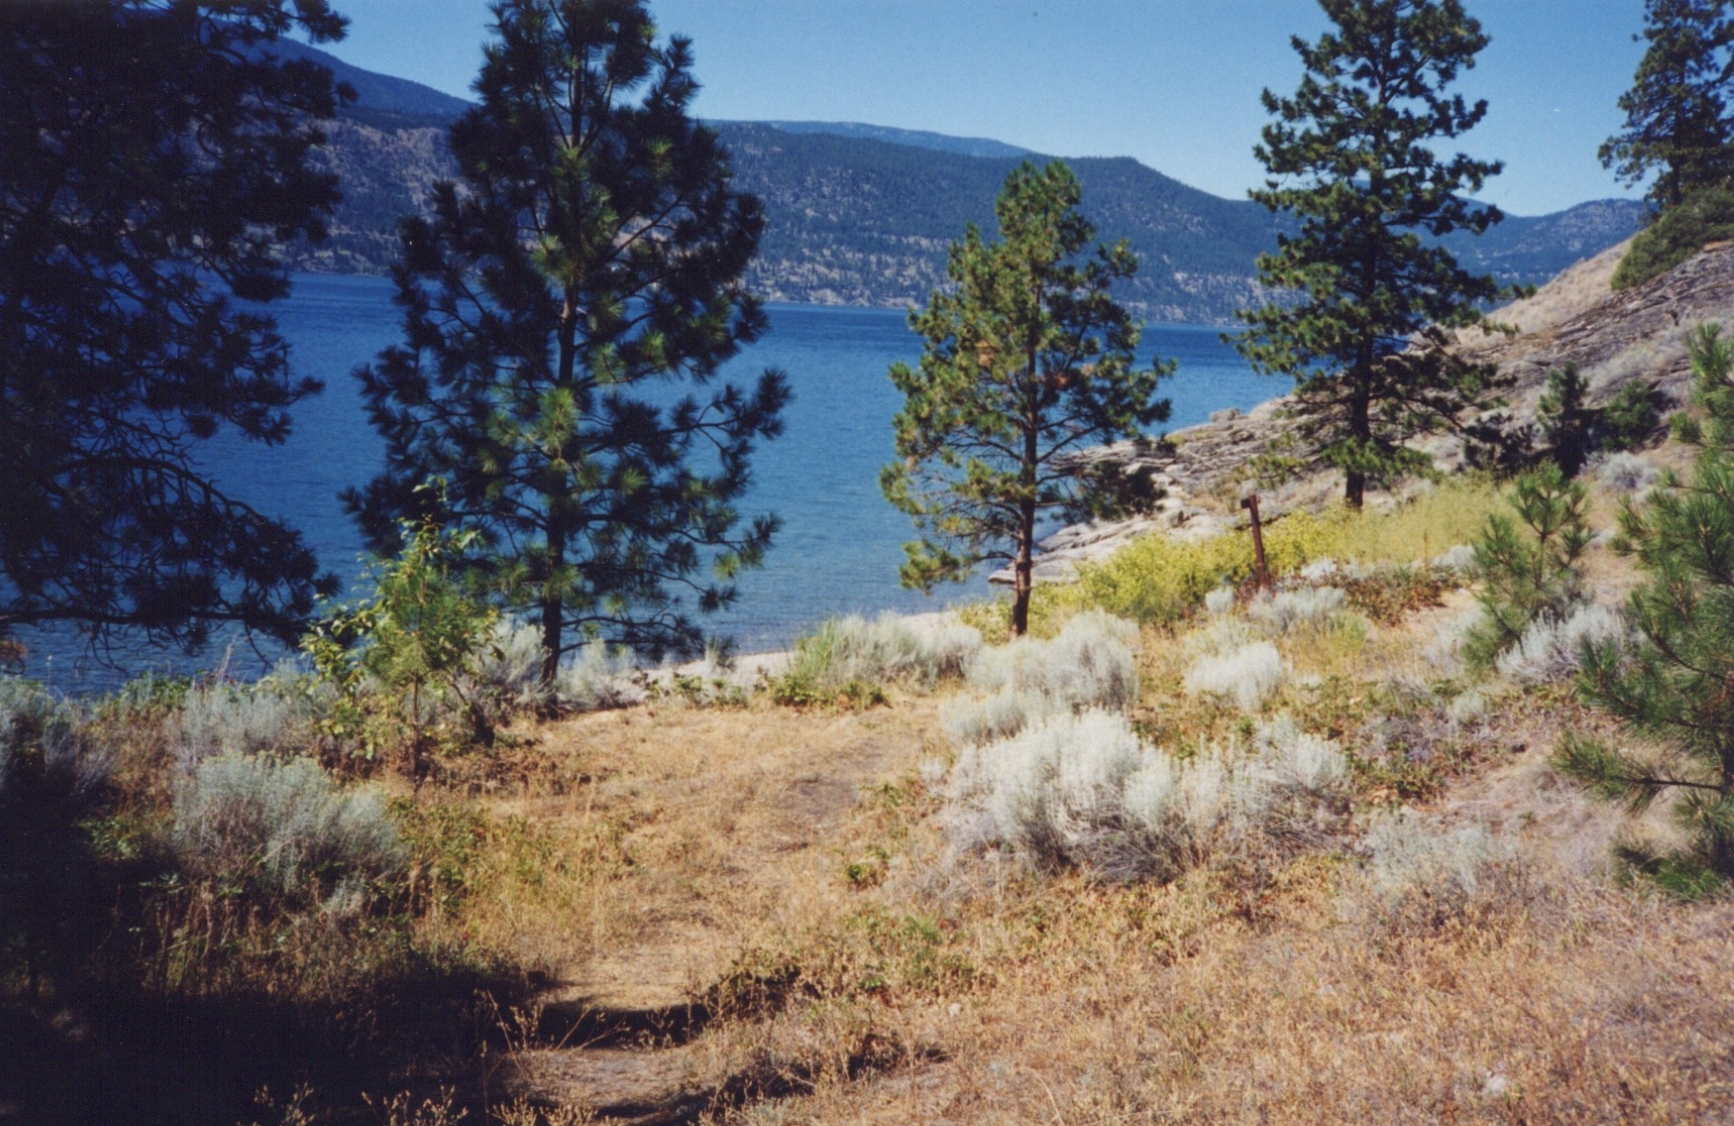 View from Okanagan Mountain showing vegetation; Okanagan Lake in the background